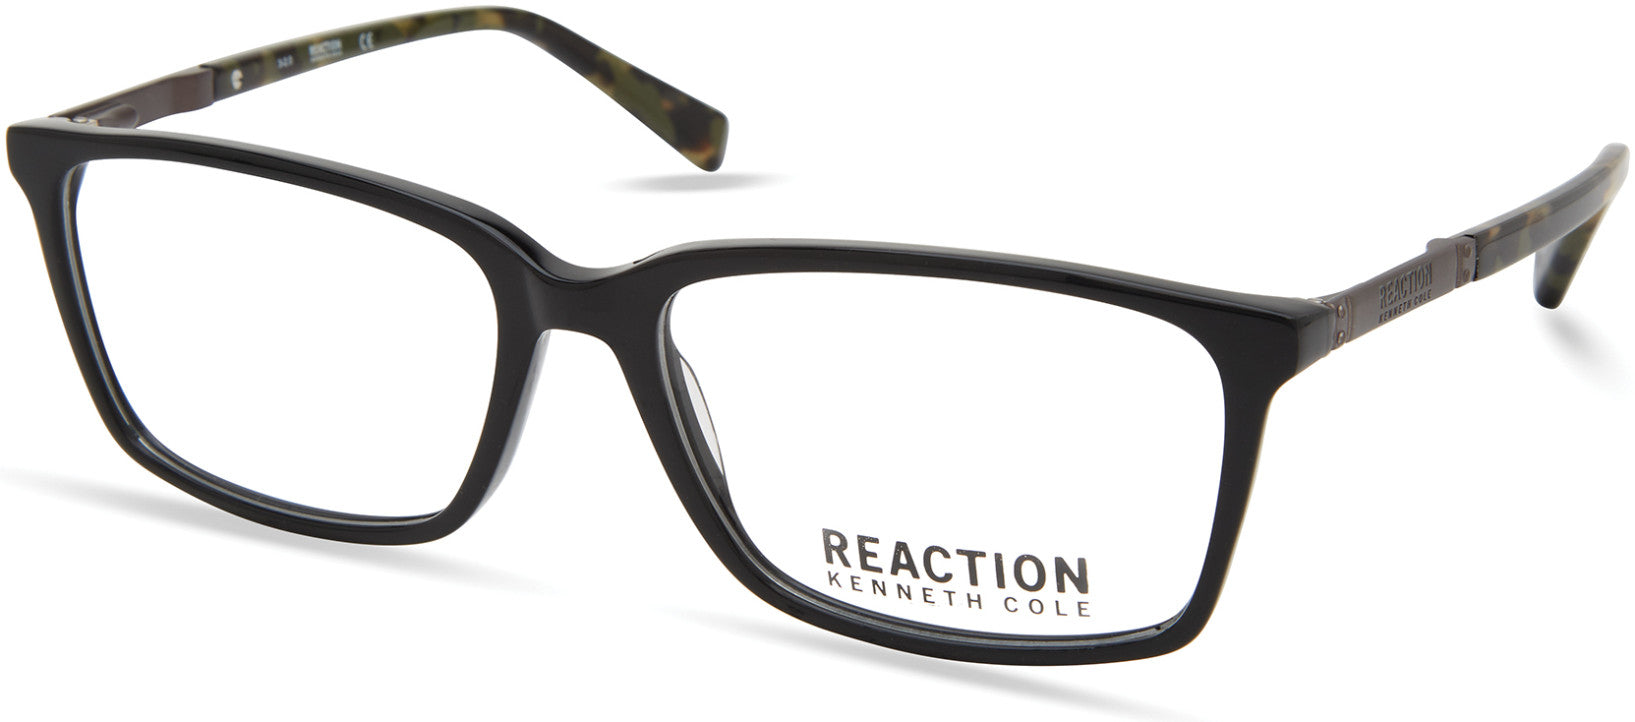 Kenneth Cole New York,Kenneth Cole Reaction KC0870 Rectangular Eyeglasses 001-001 - Shiny Black